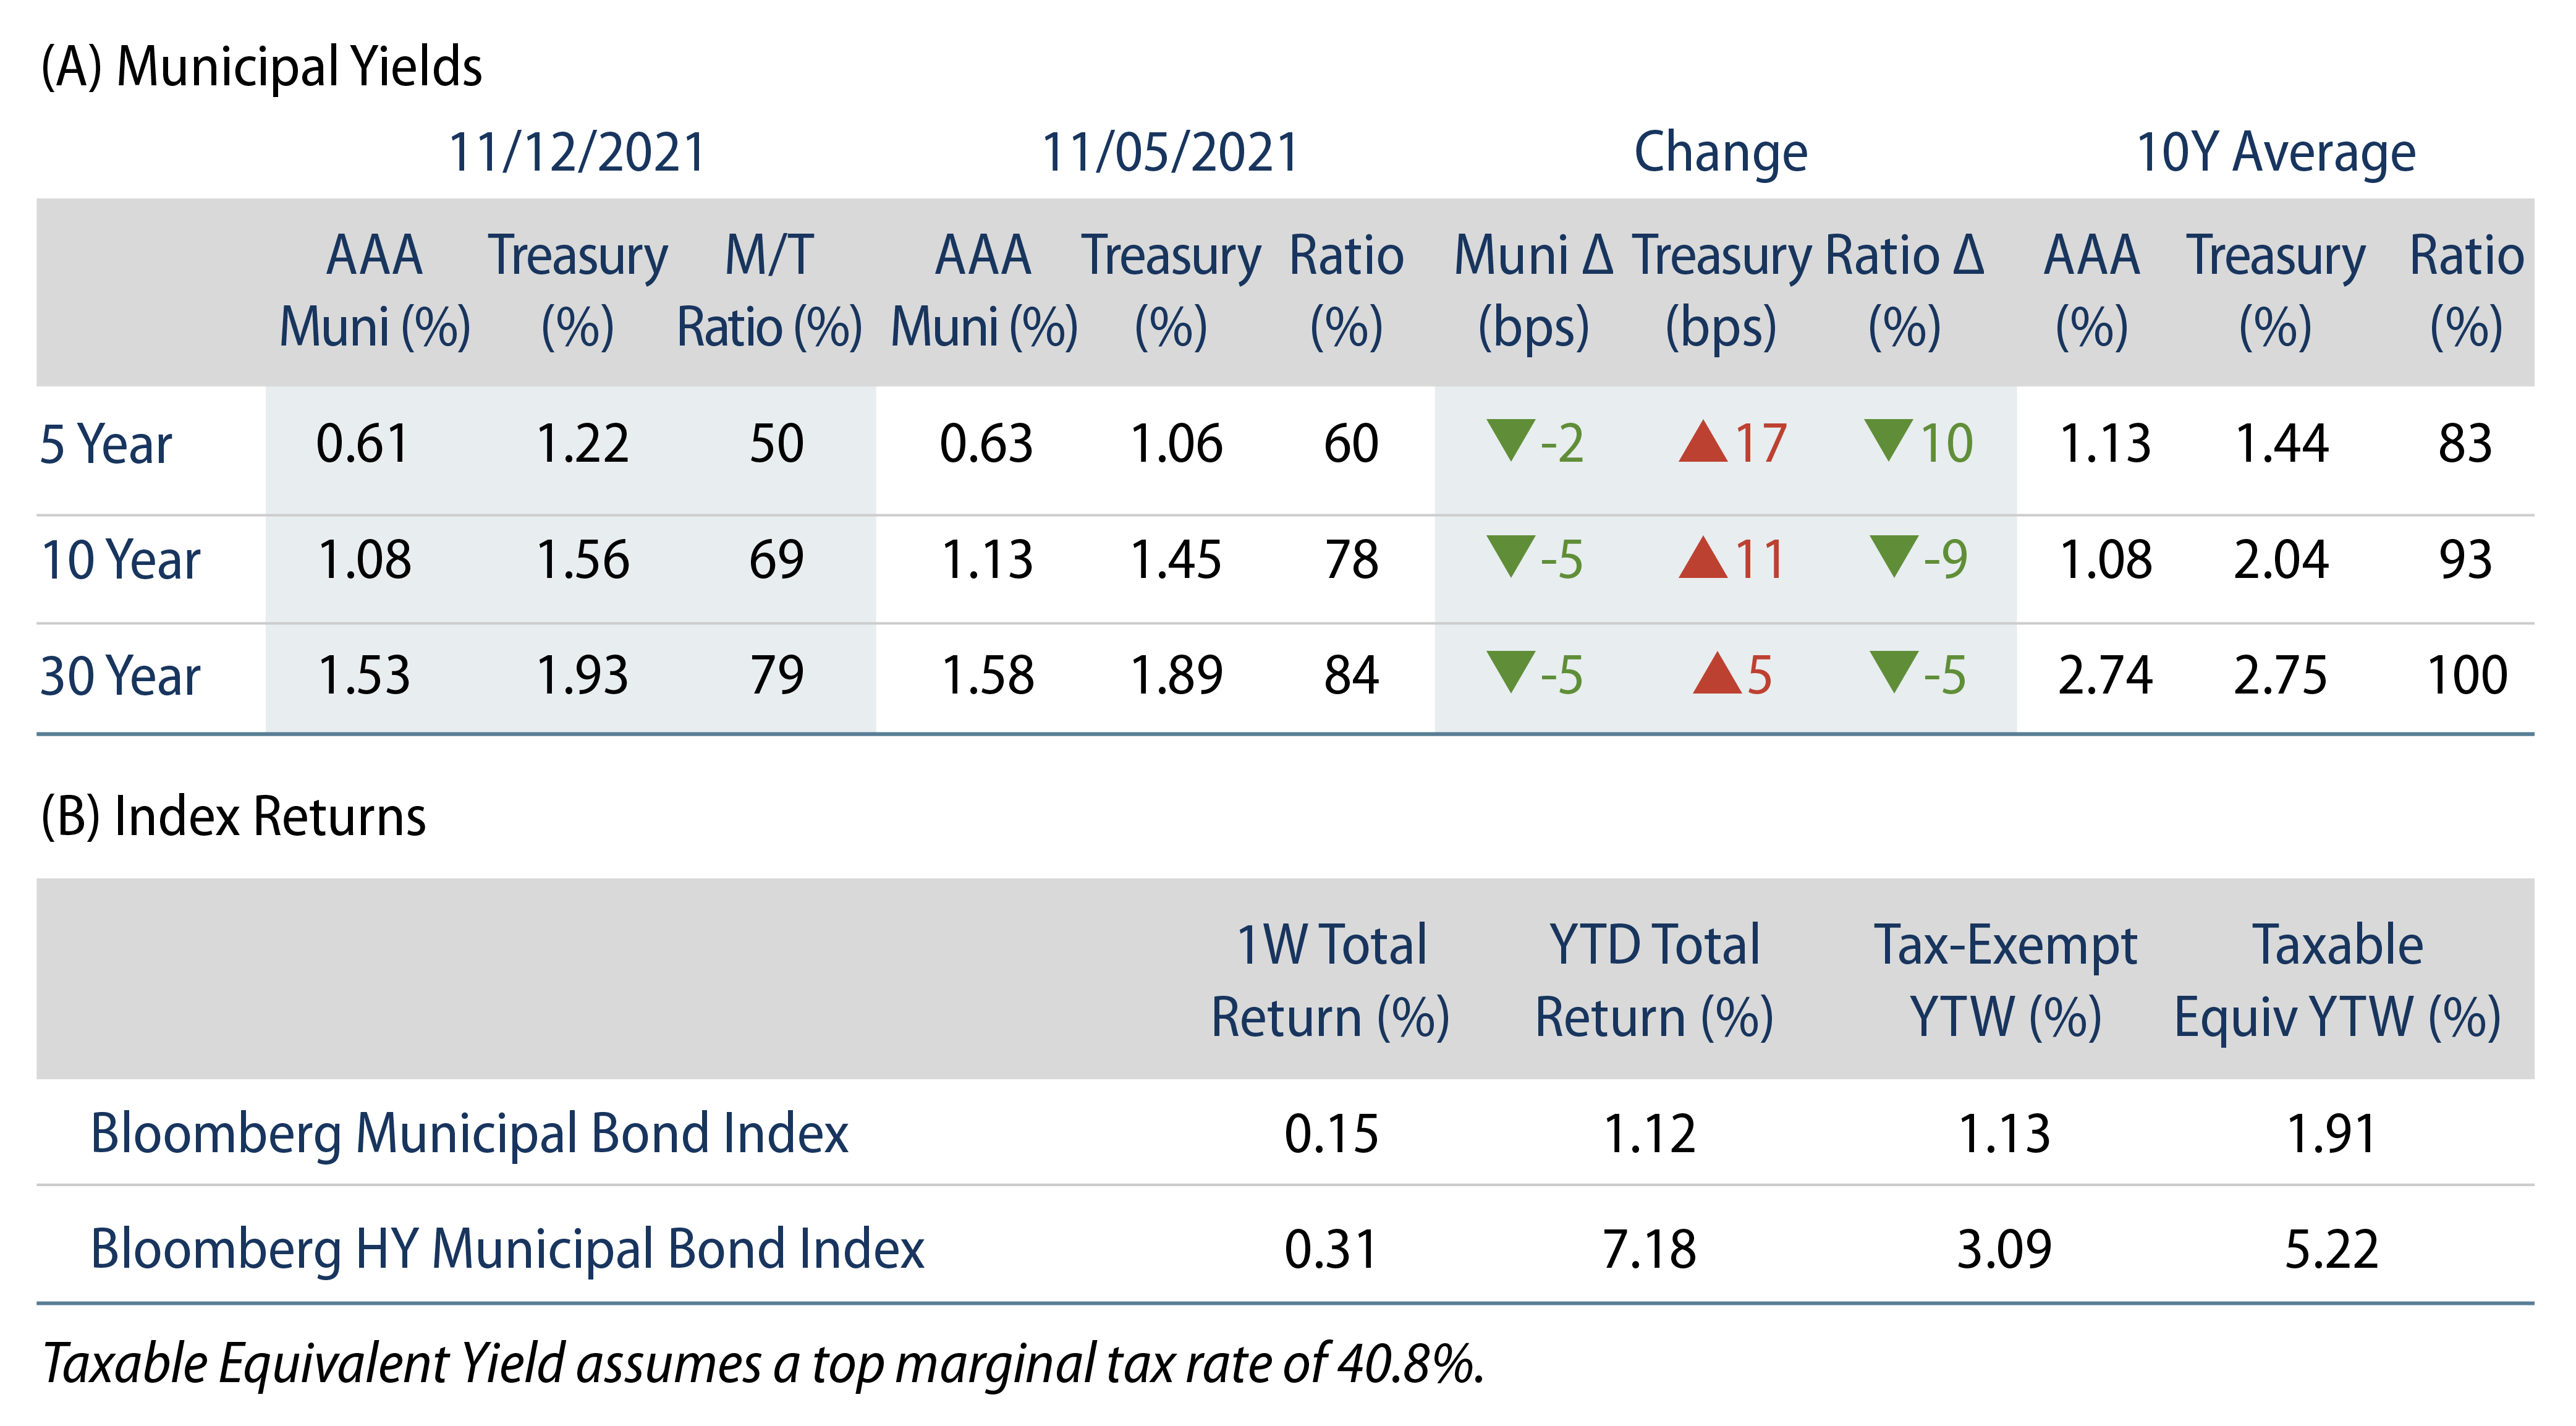 Exhibit 1: Municipal Bond Yields and Index Return